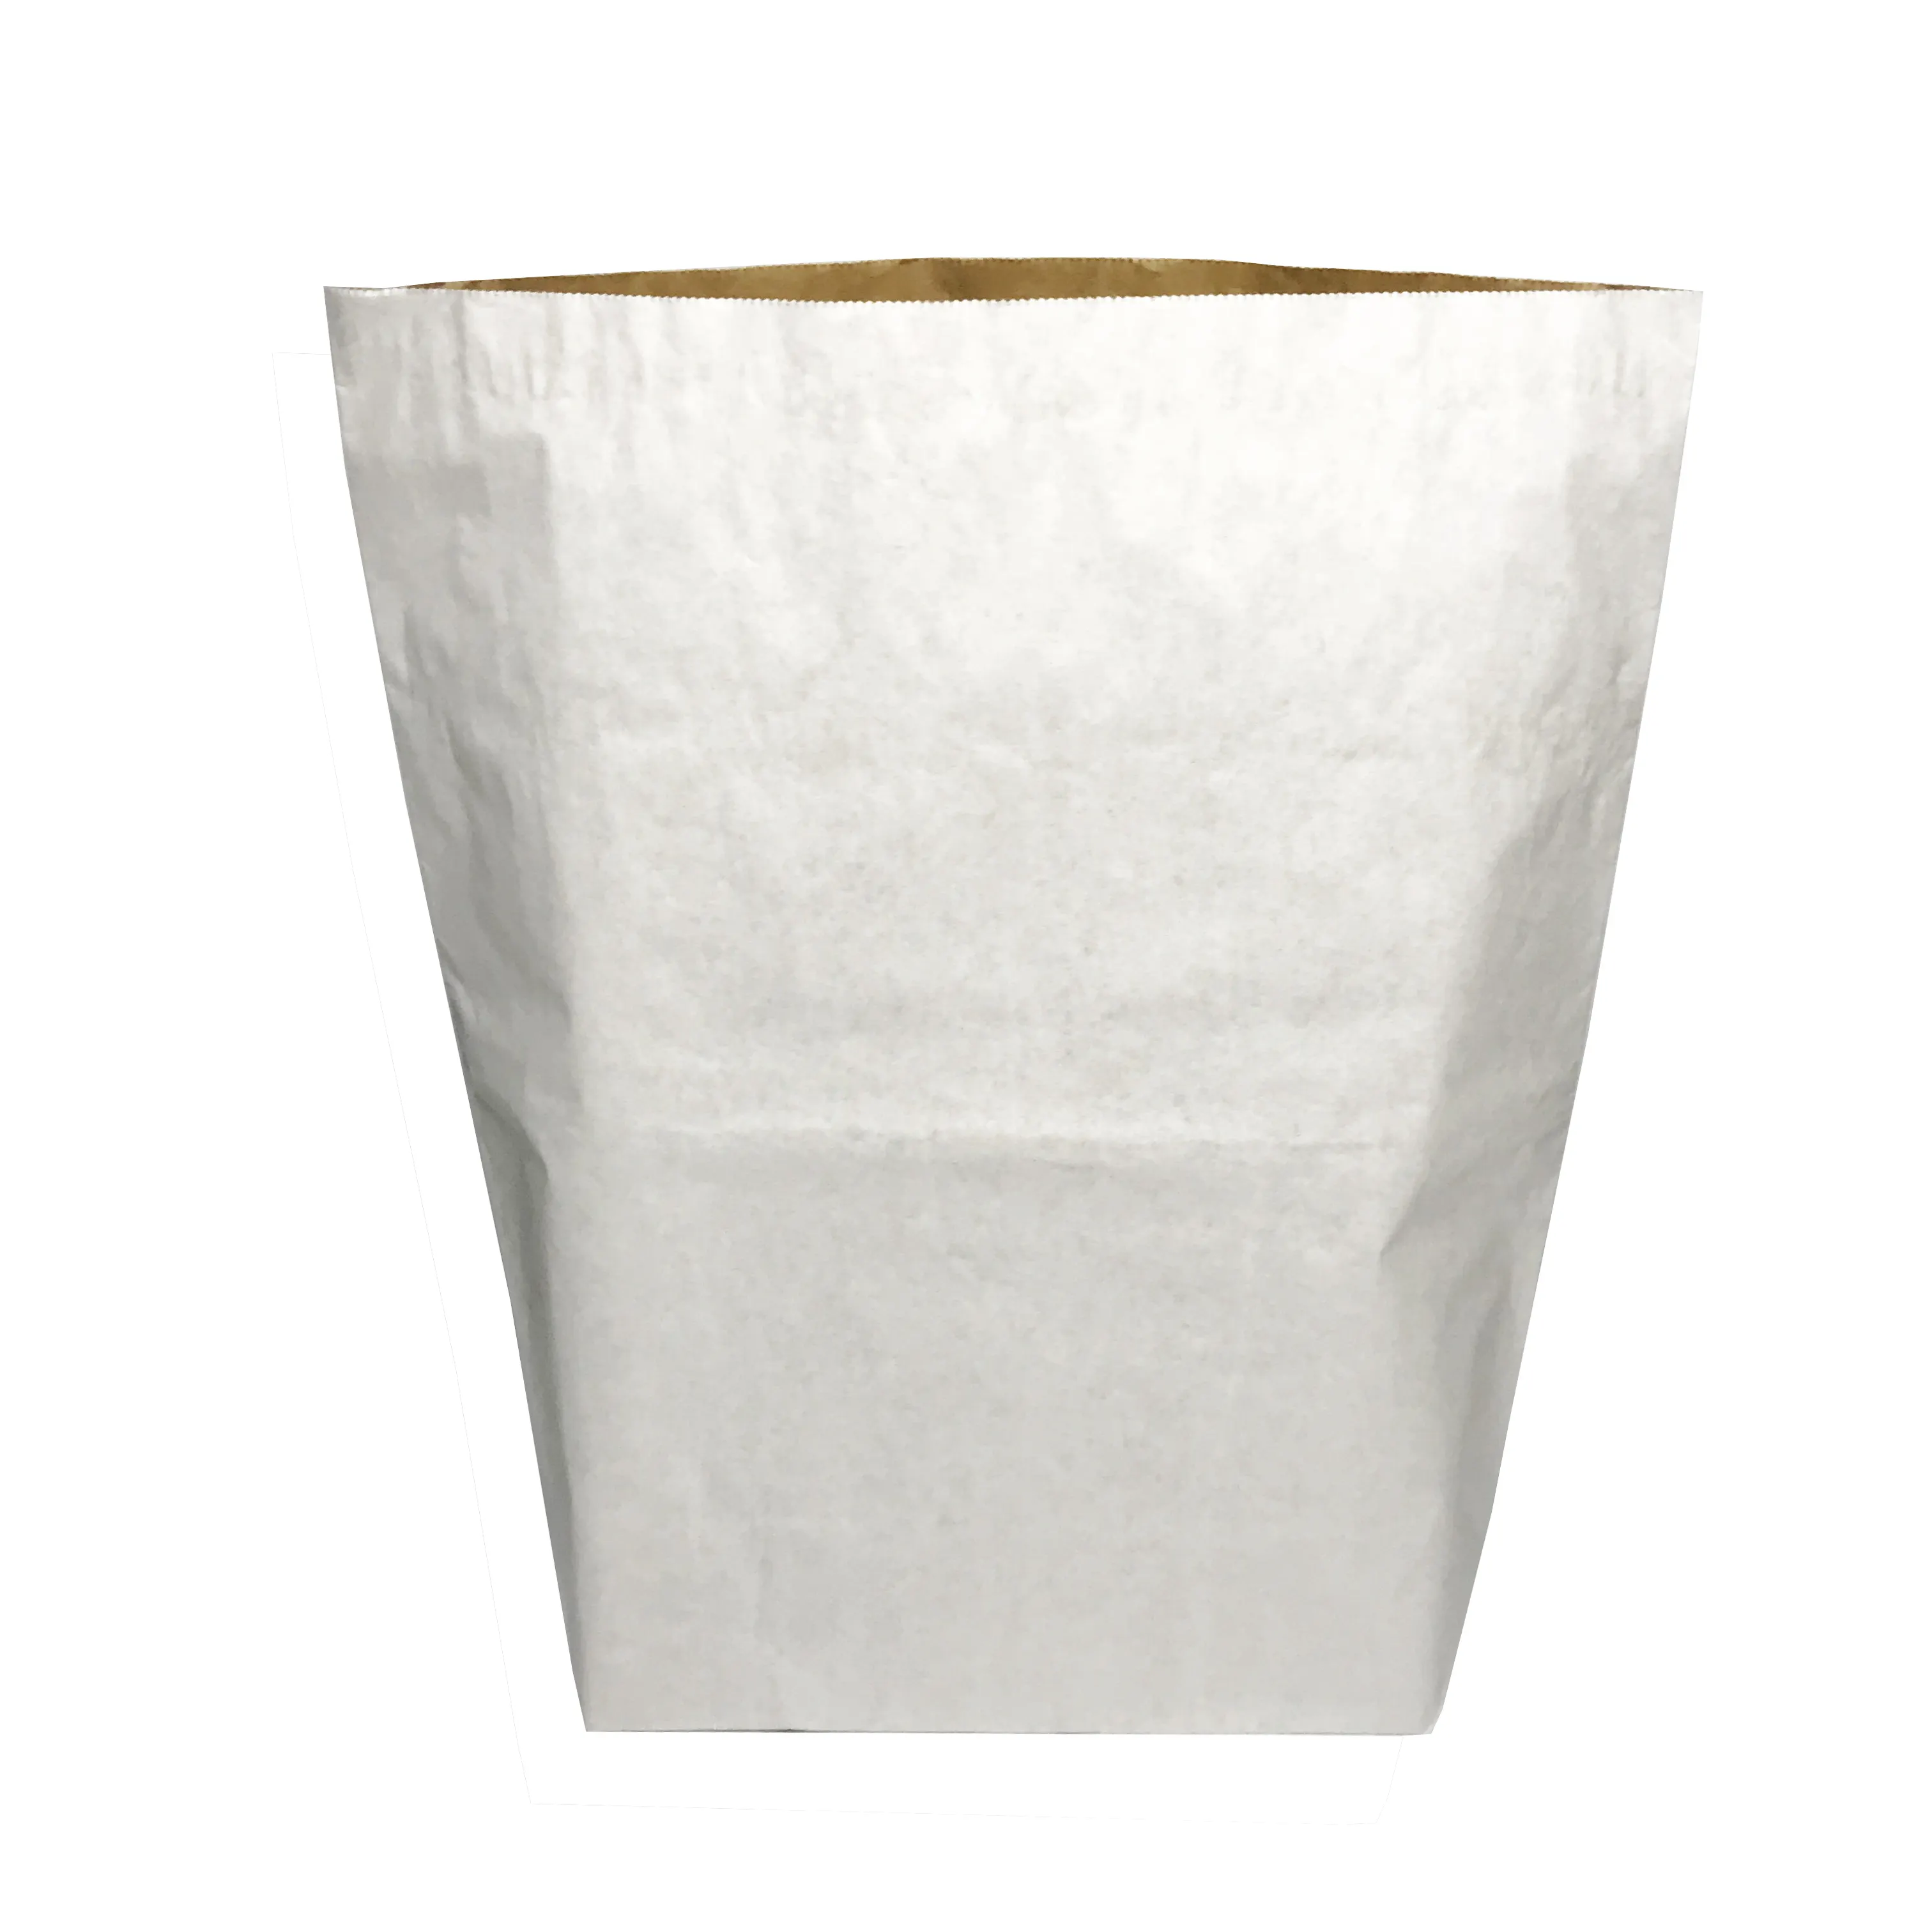 Bolsas de papel de múltiples capas de fondo plano biodegradable Molino de maíz Pan Bolsa de harina de trigo